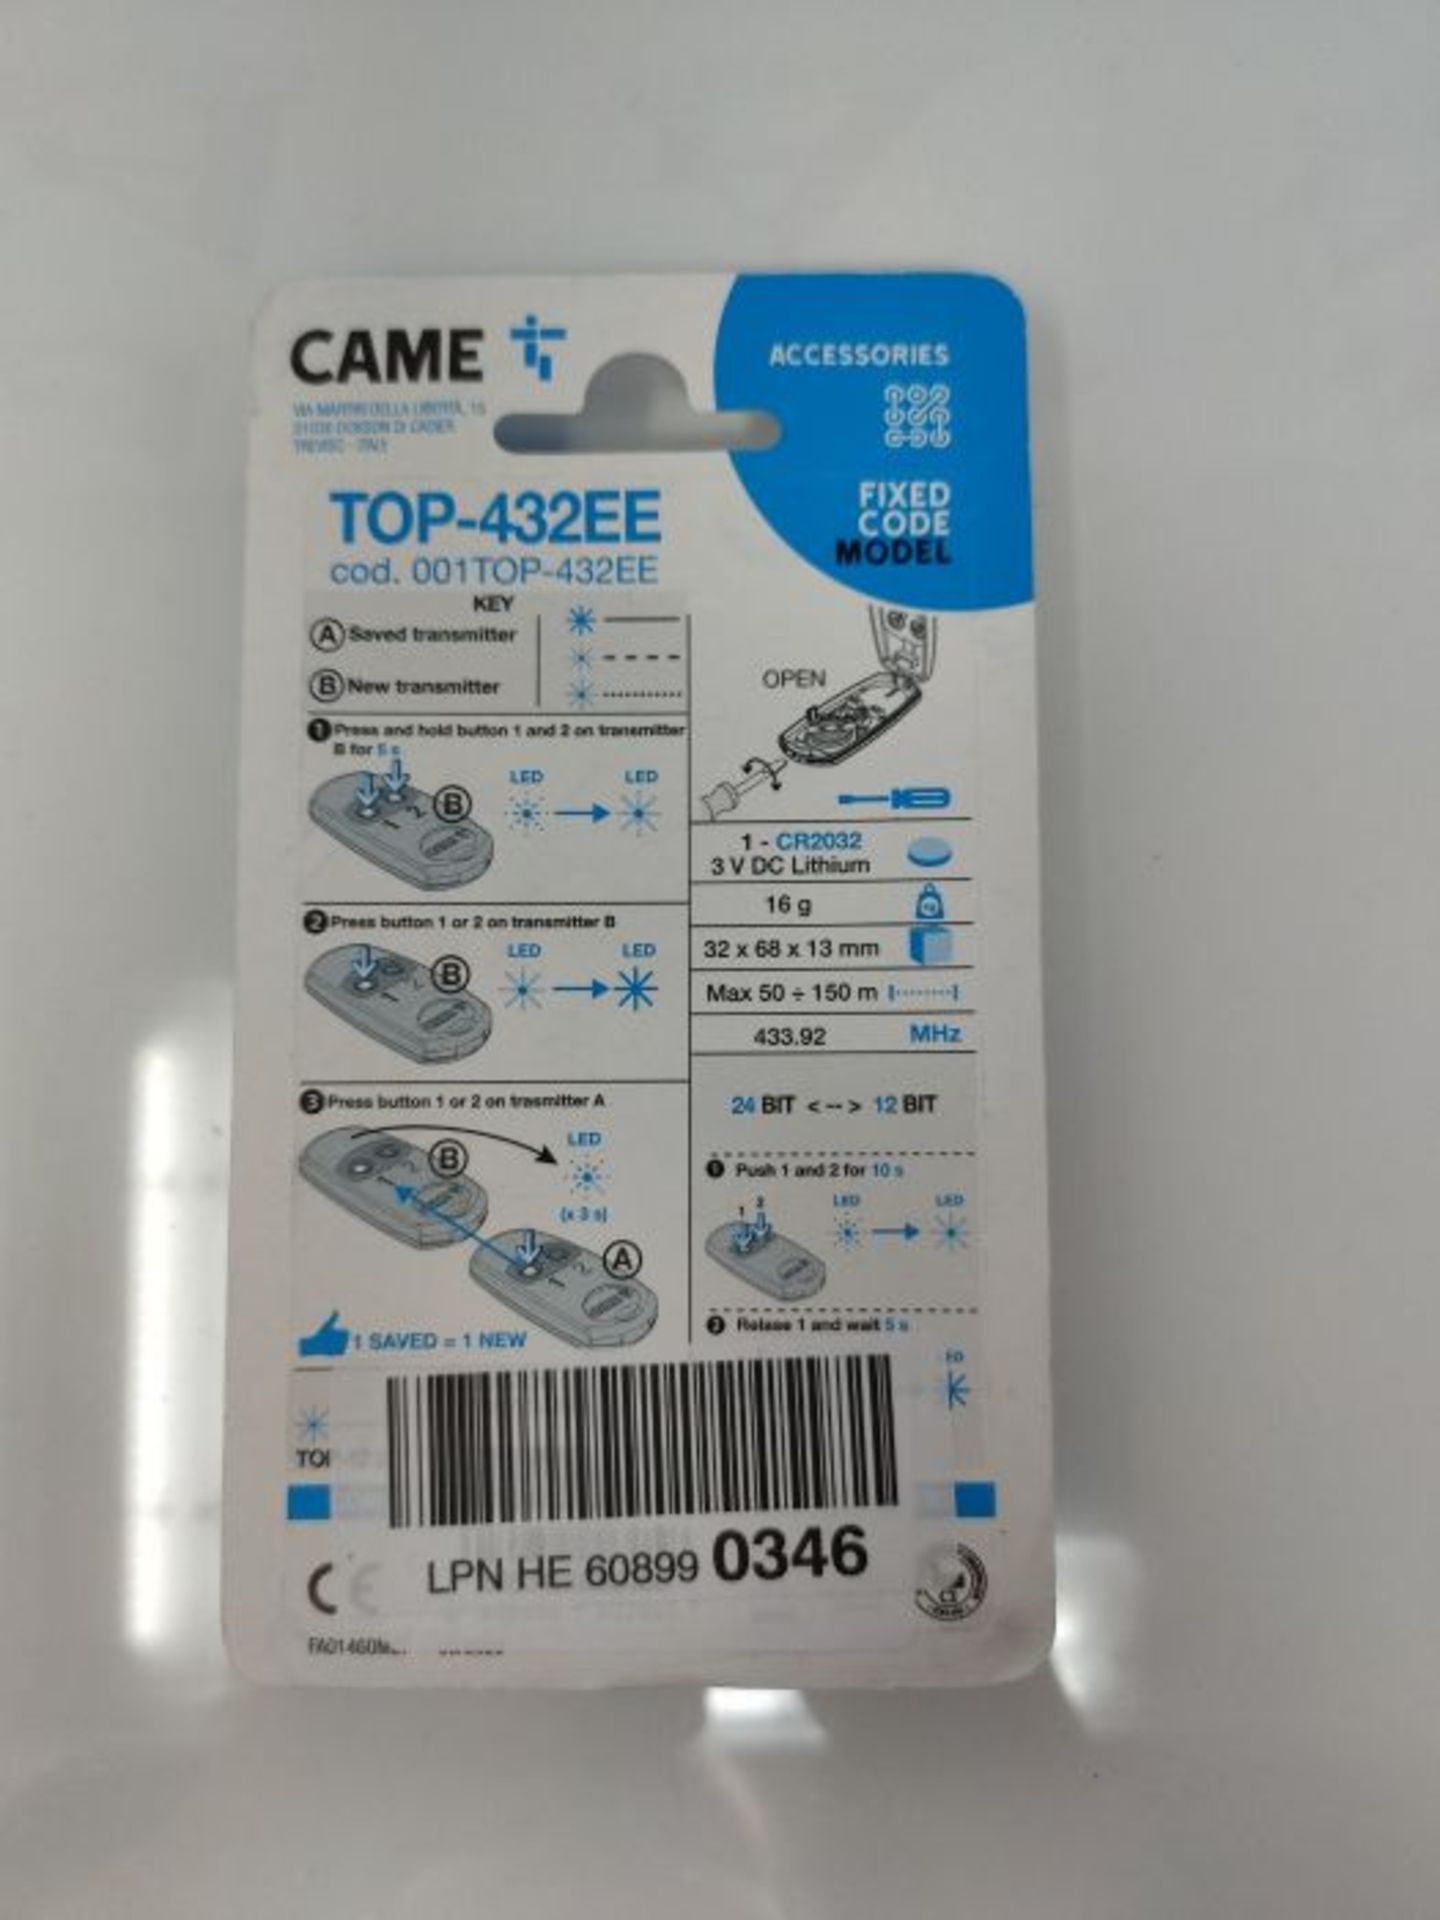 CAME TOP 432 EV Remote Control gate-Opener Original, Replaces TOP432NA - Top 432 S - Image 3 of 3